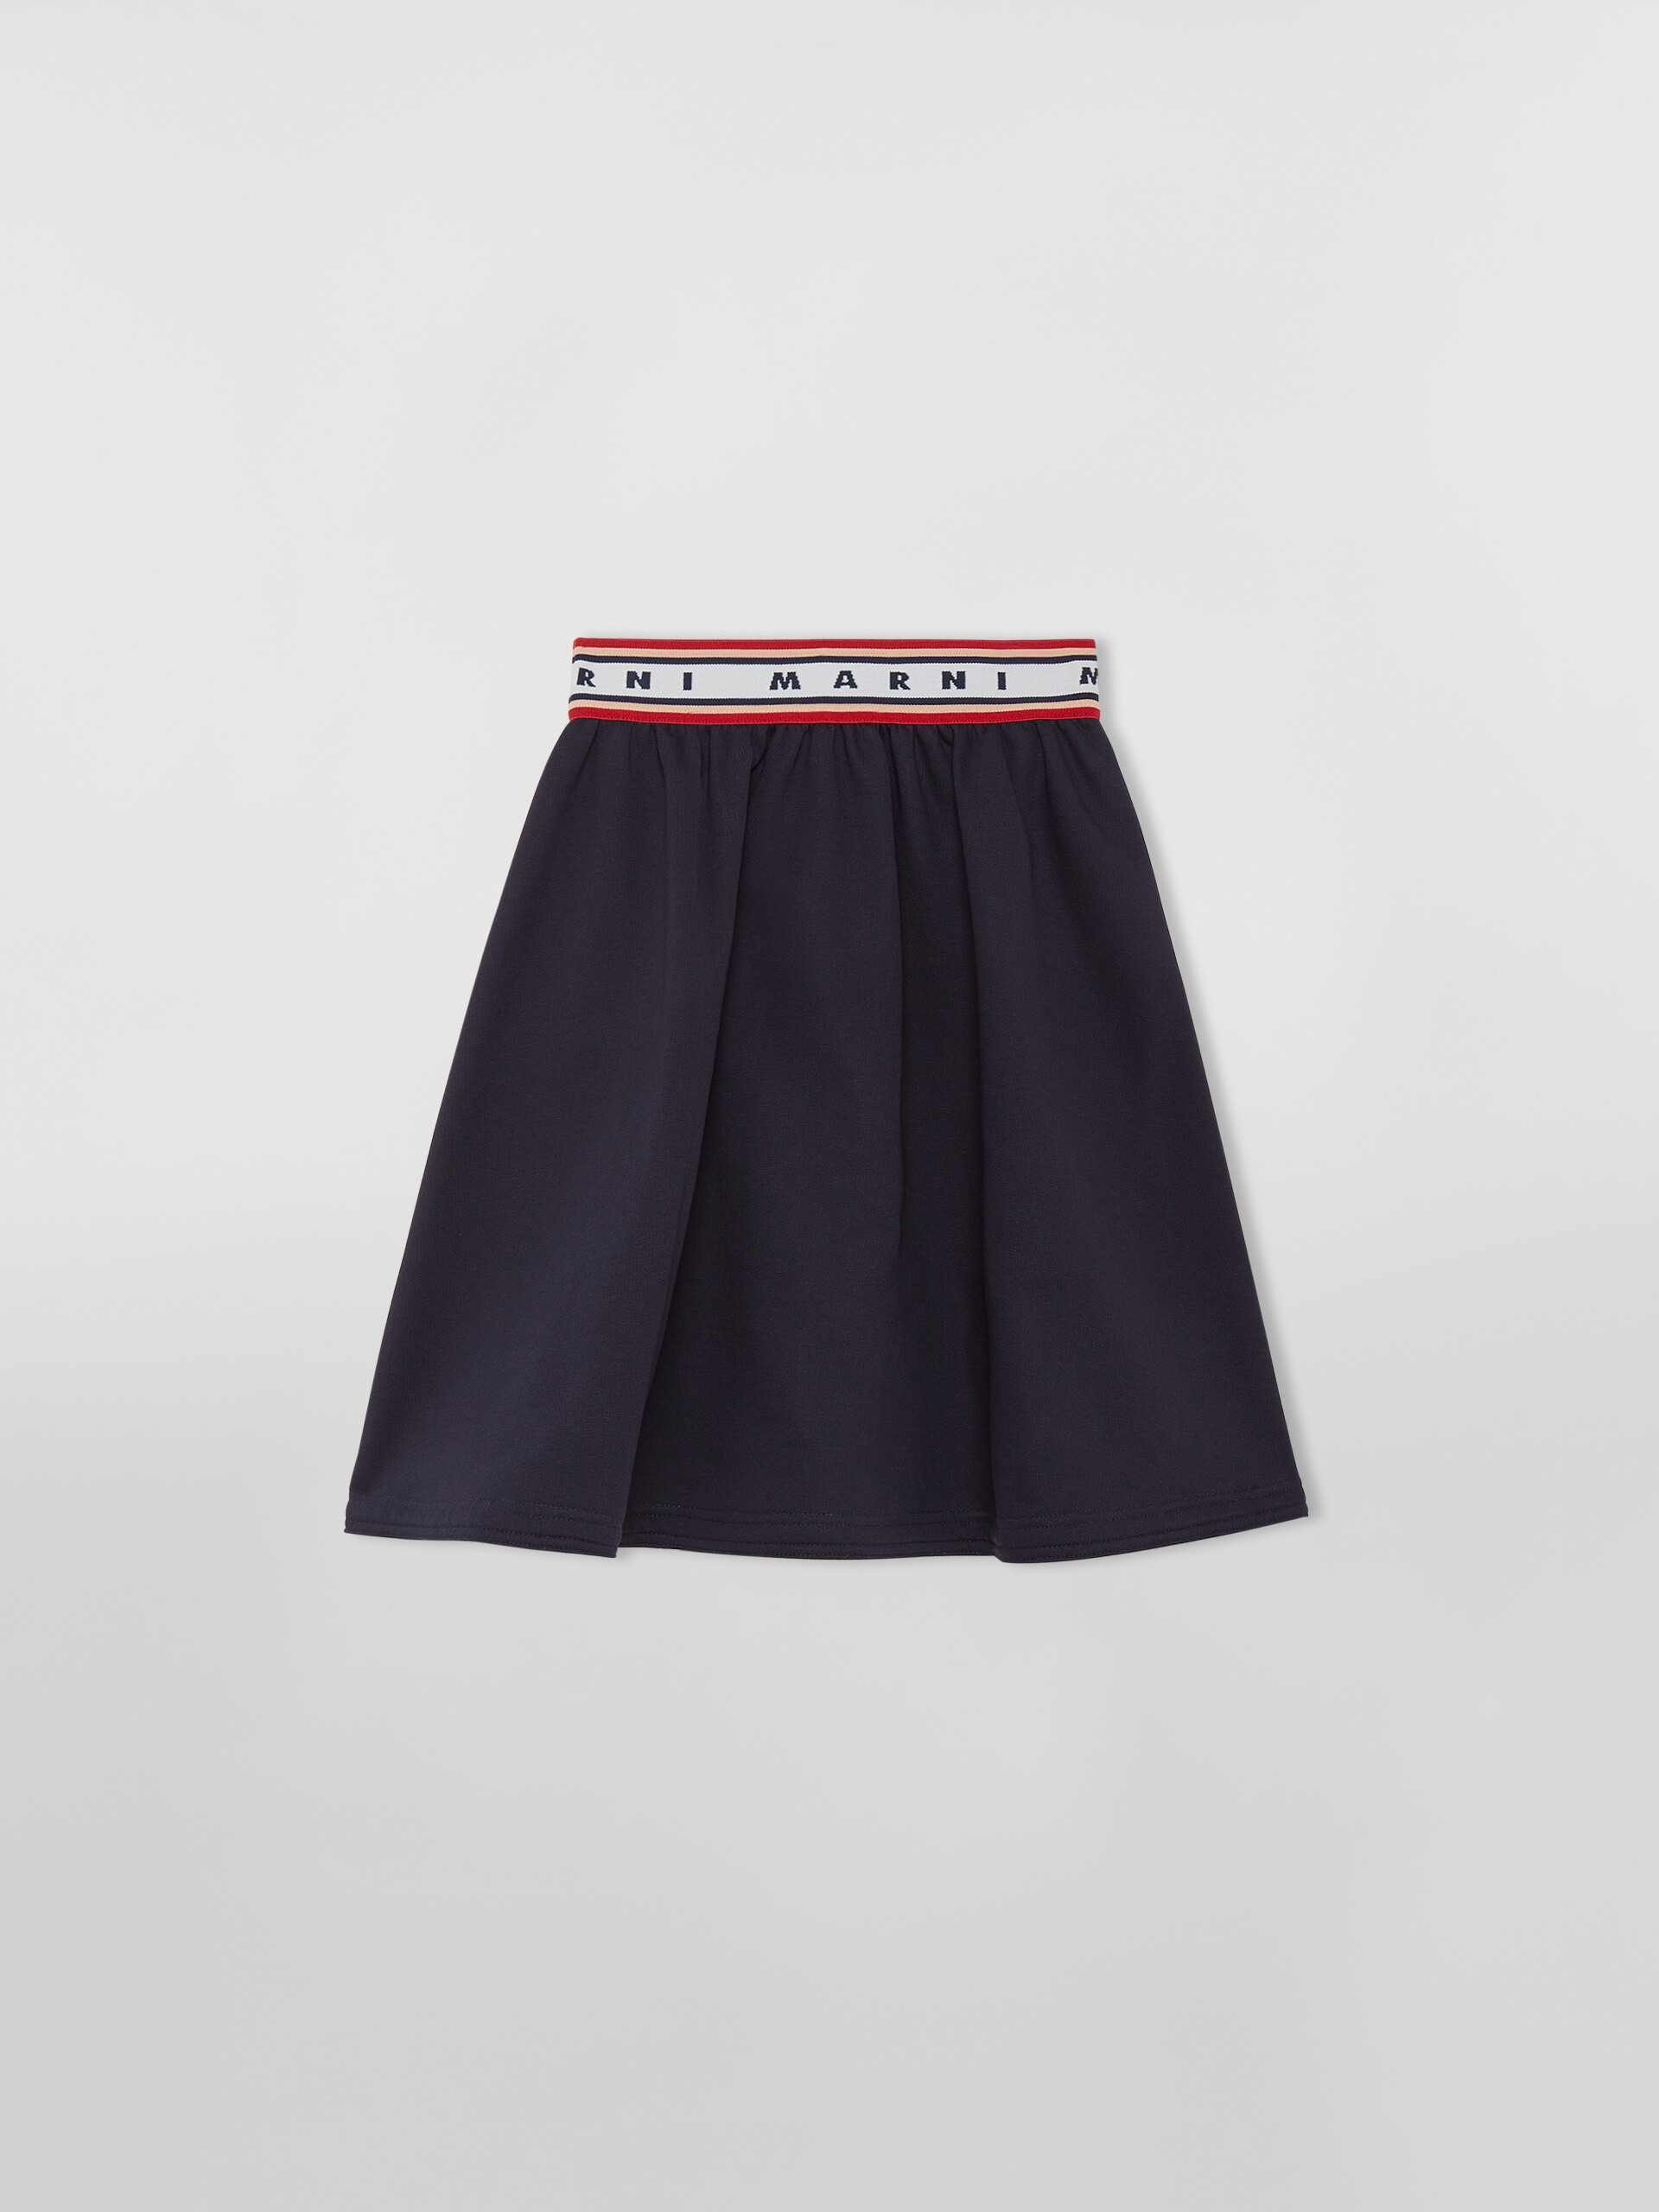 SKIRT WITH "BOLLO DAISY" PRINT - Skirts - Image 2